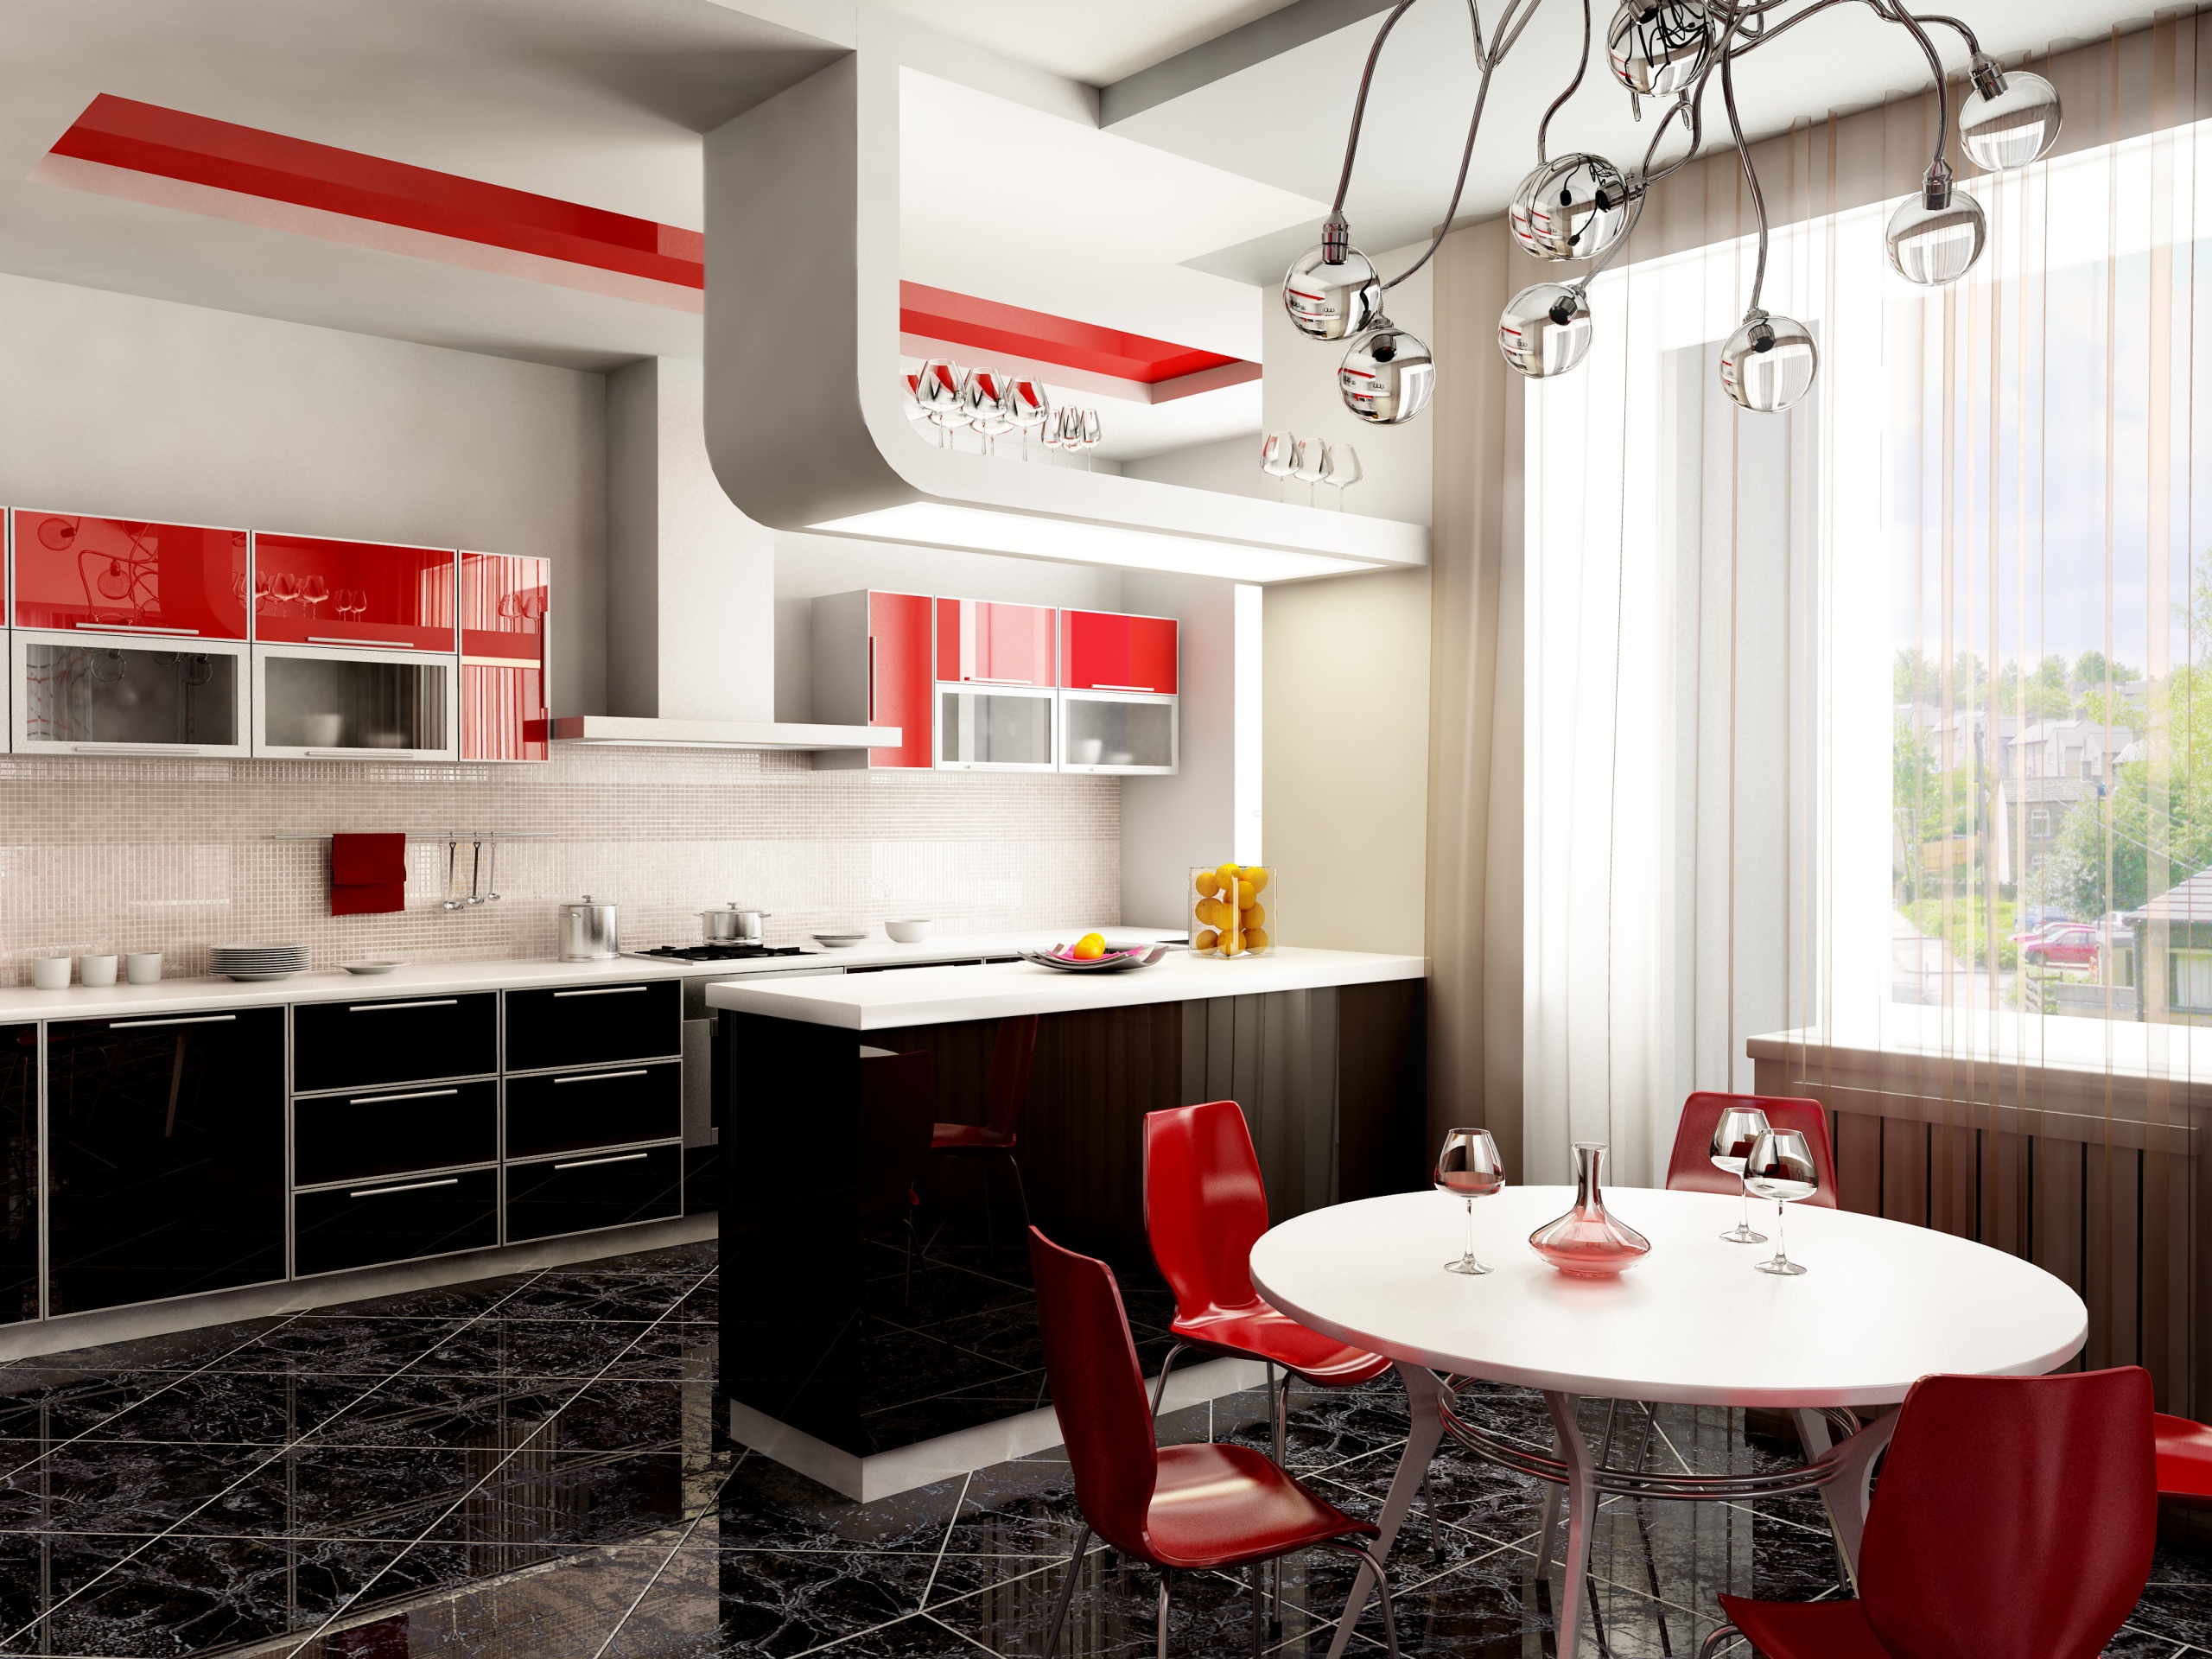 kitchen wallpaper,interior design,room,furniture,red,countertop